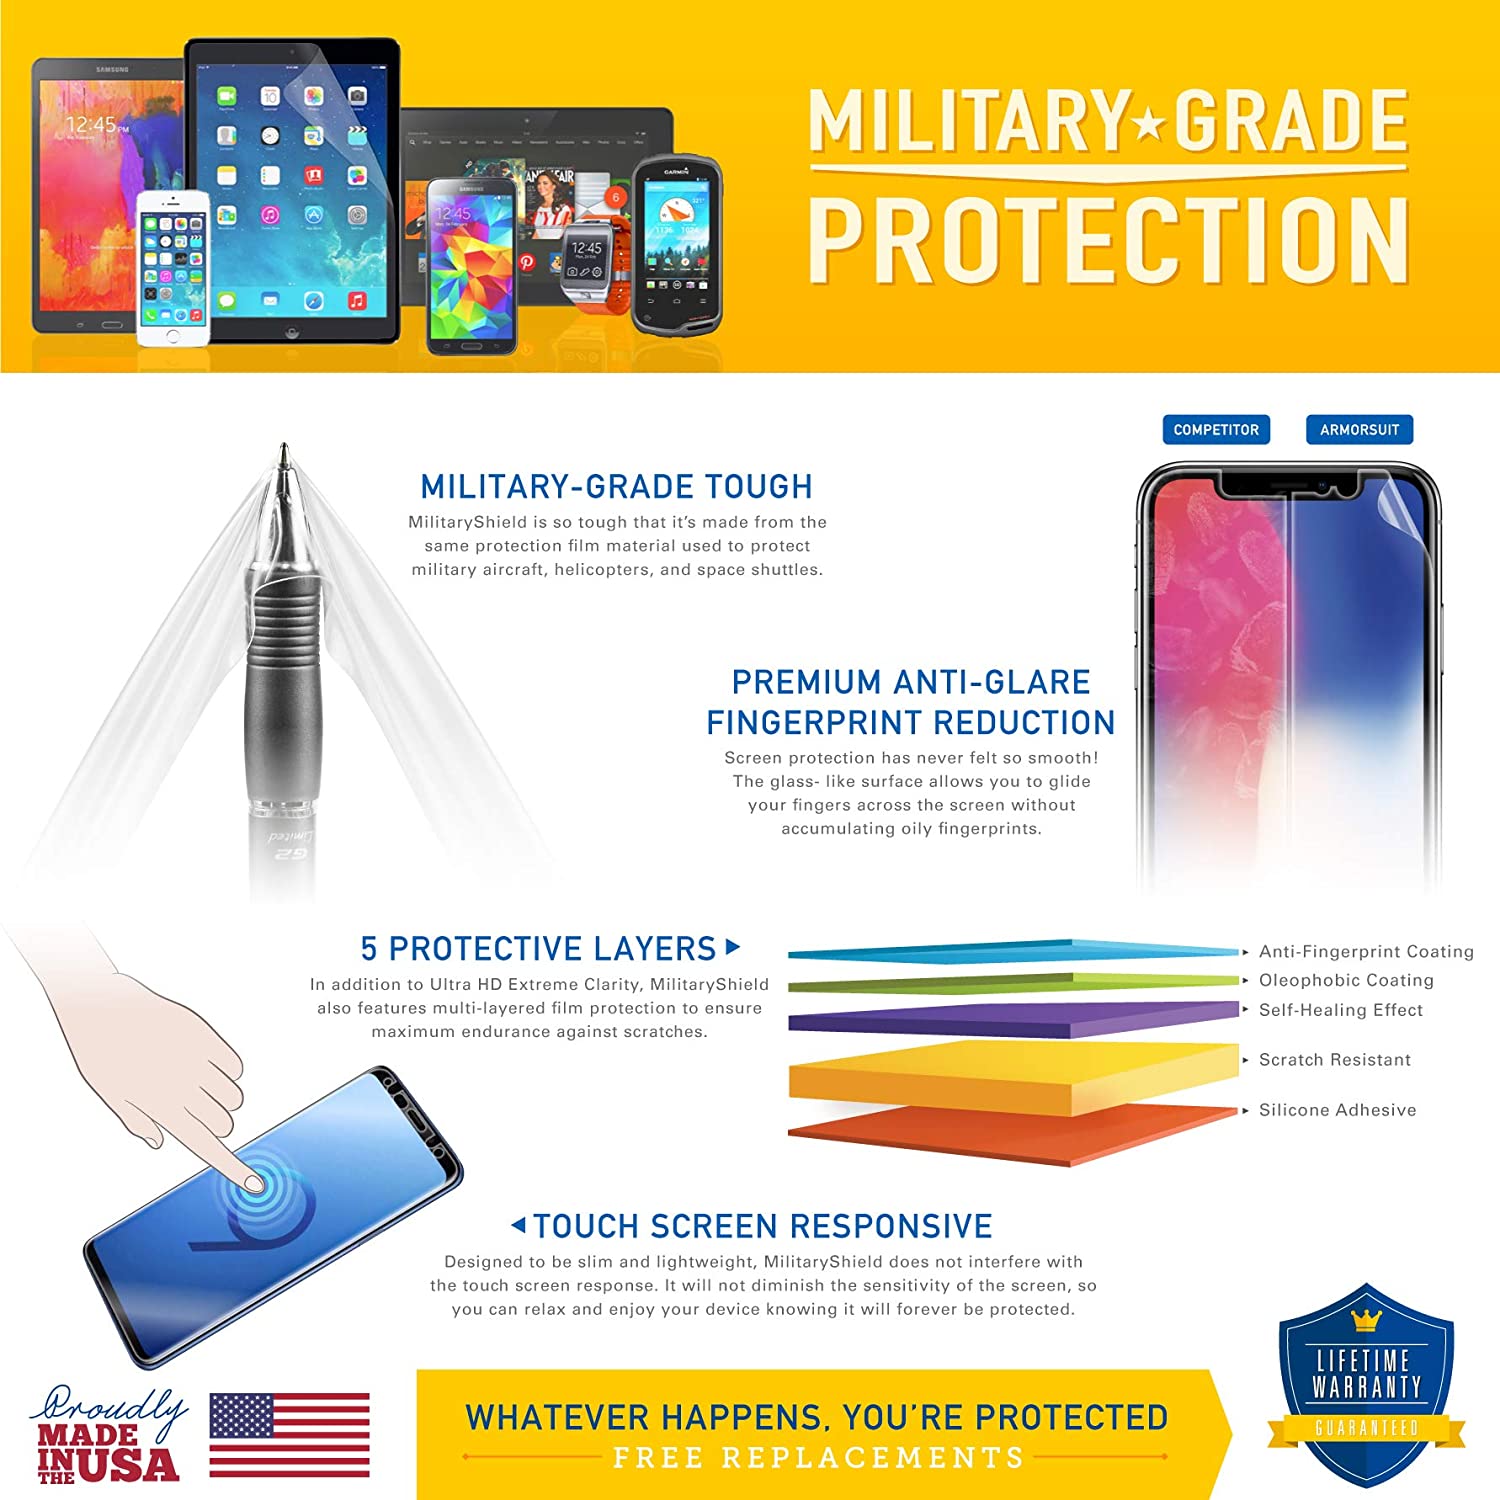 Samsung Galaxy S8 Full Body Skin Protector